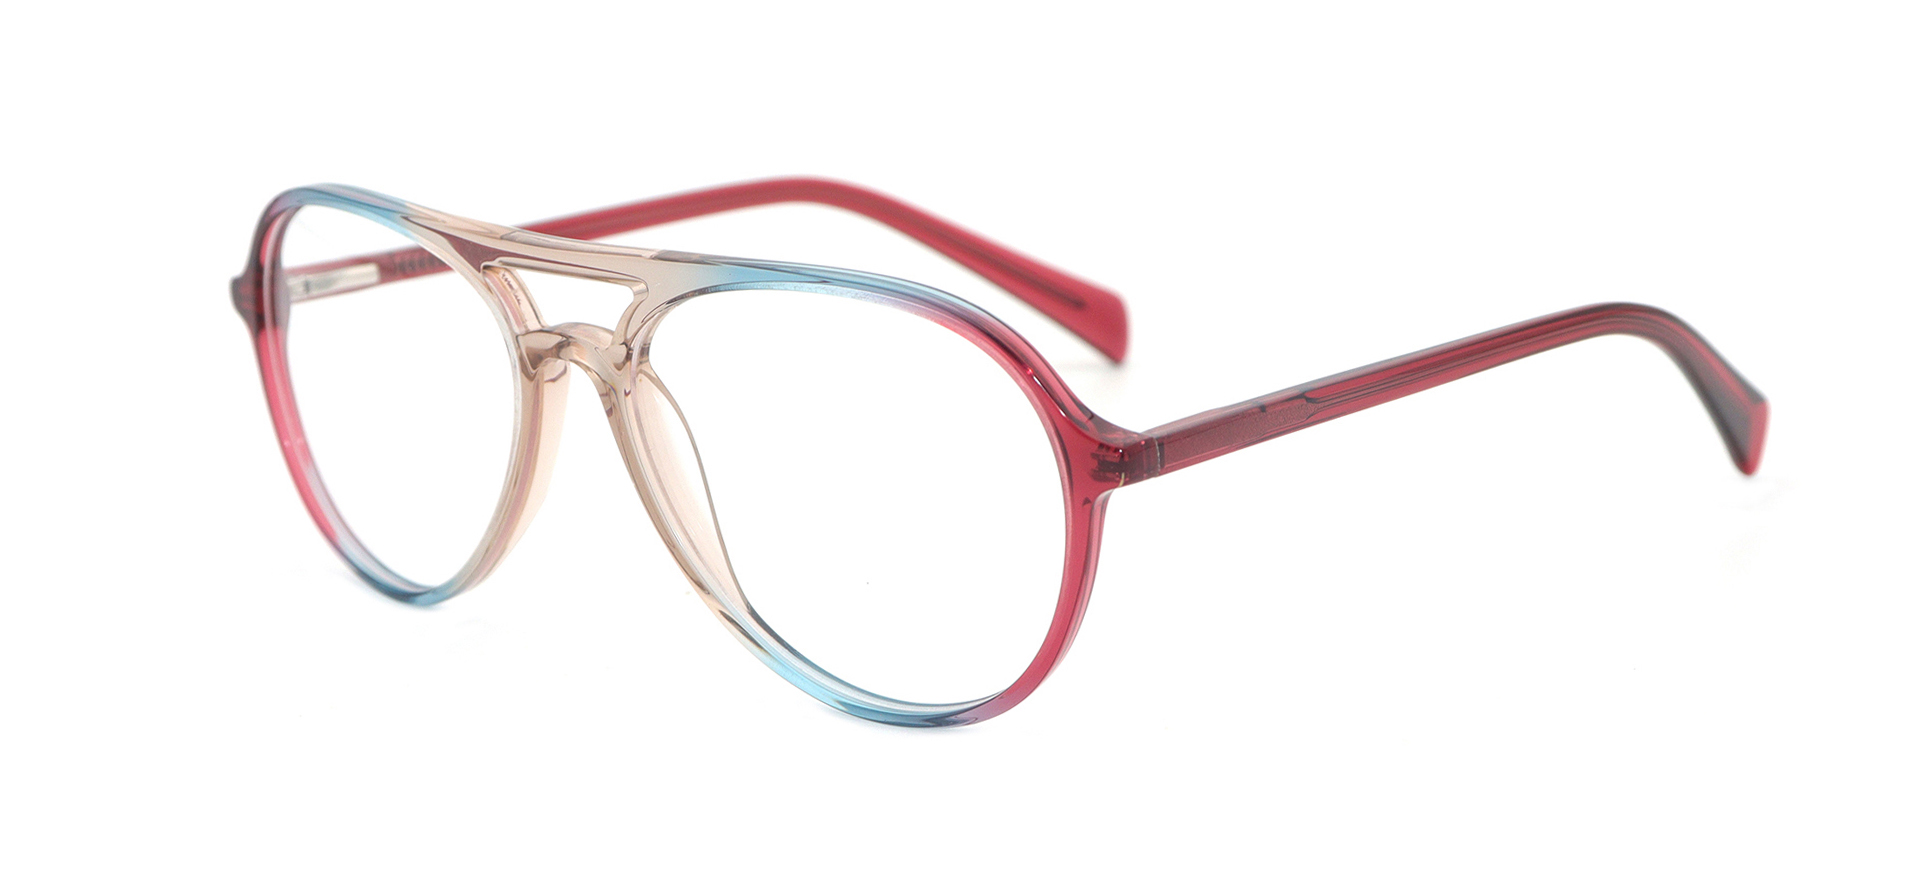 Colorful eyeglasses